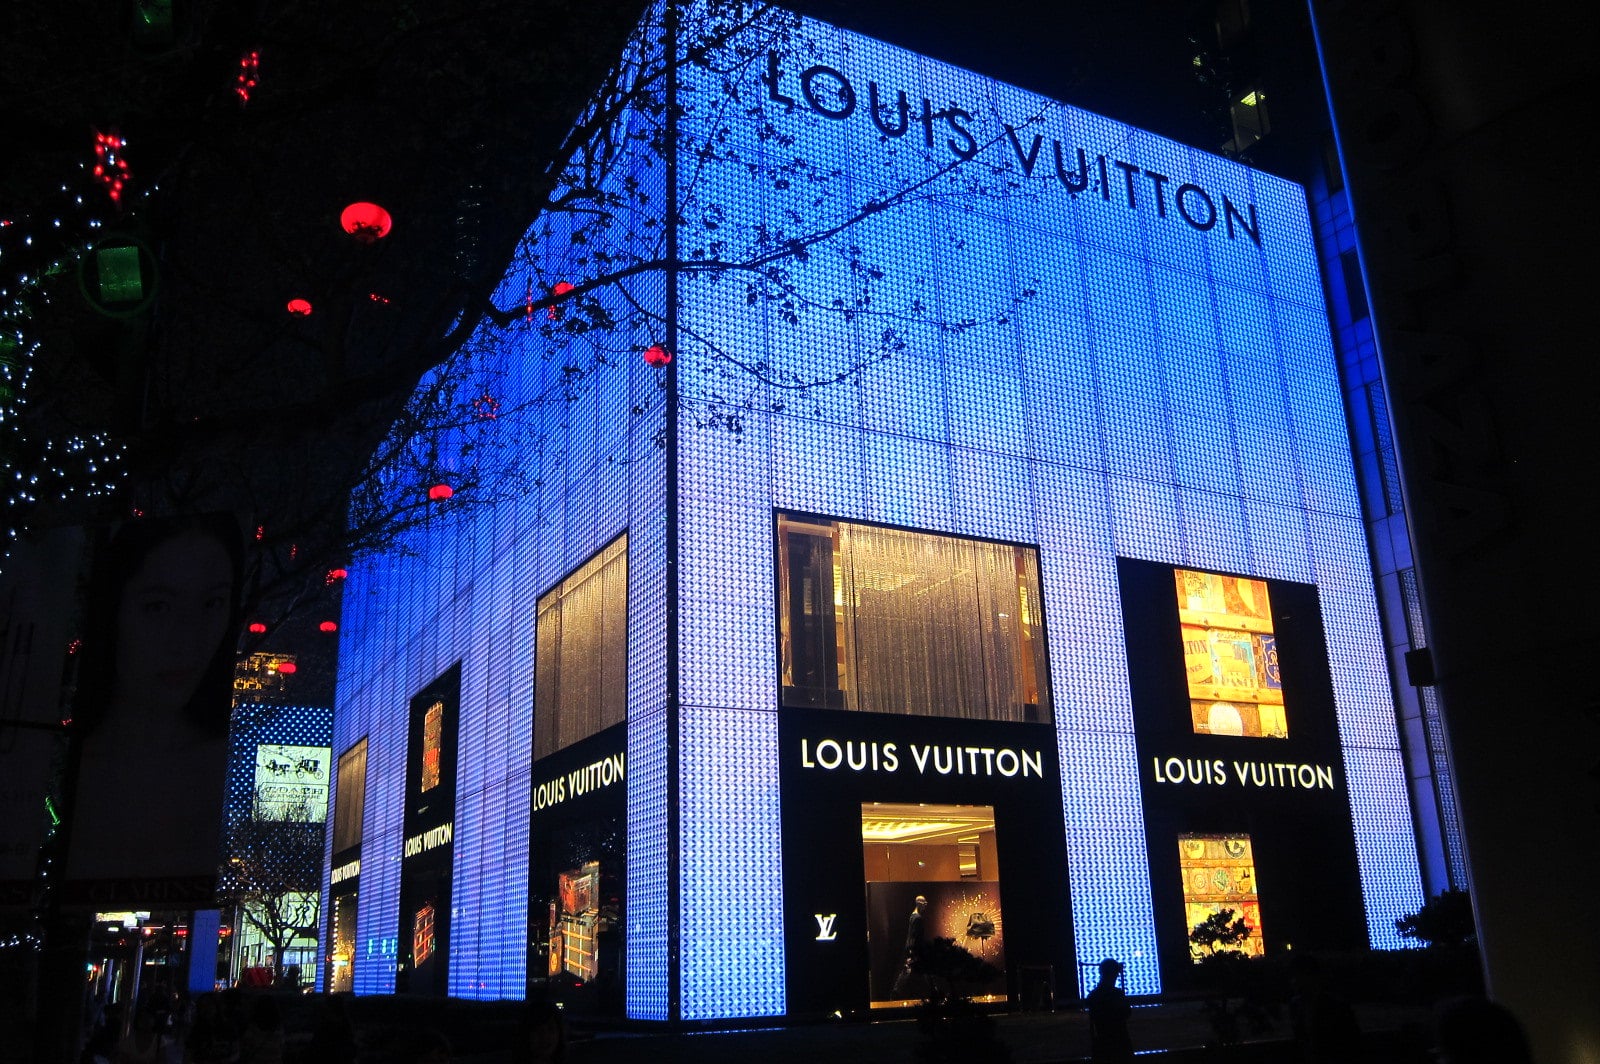 Louis Vuitton Shanghai Pudong store, China